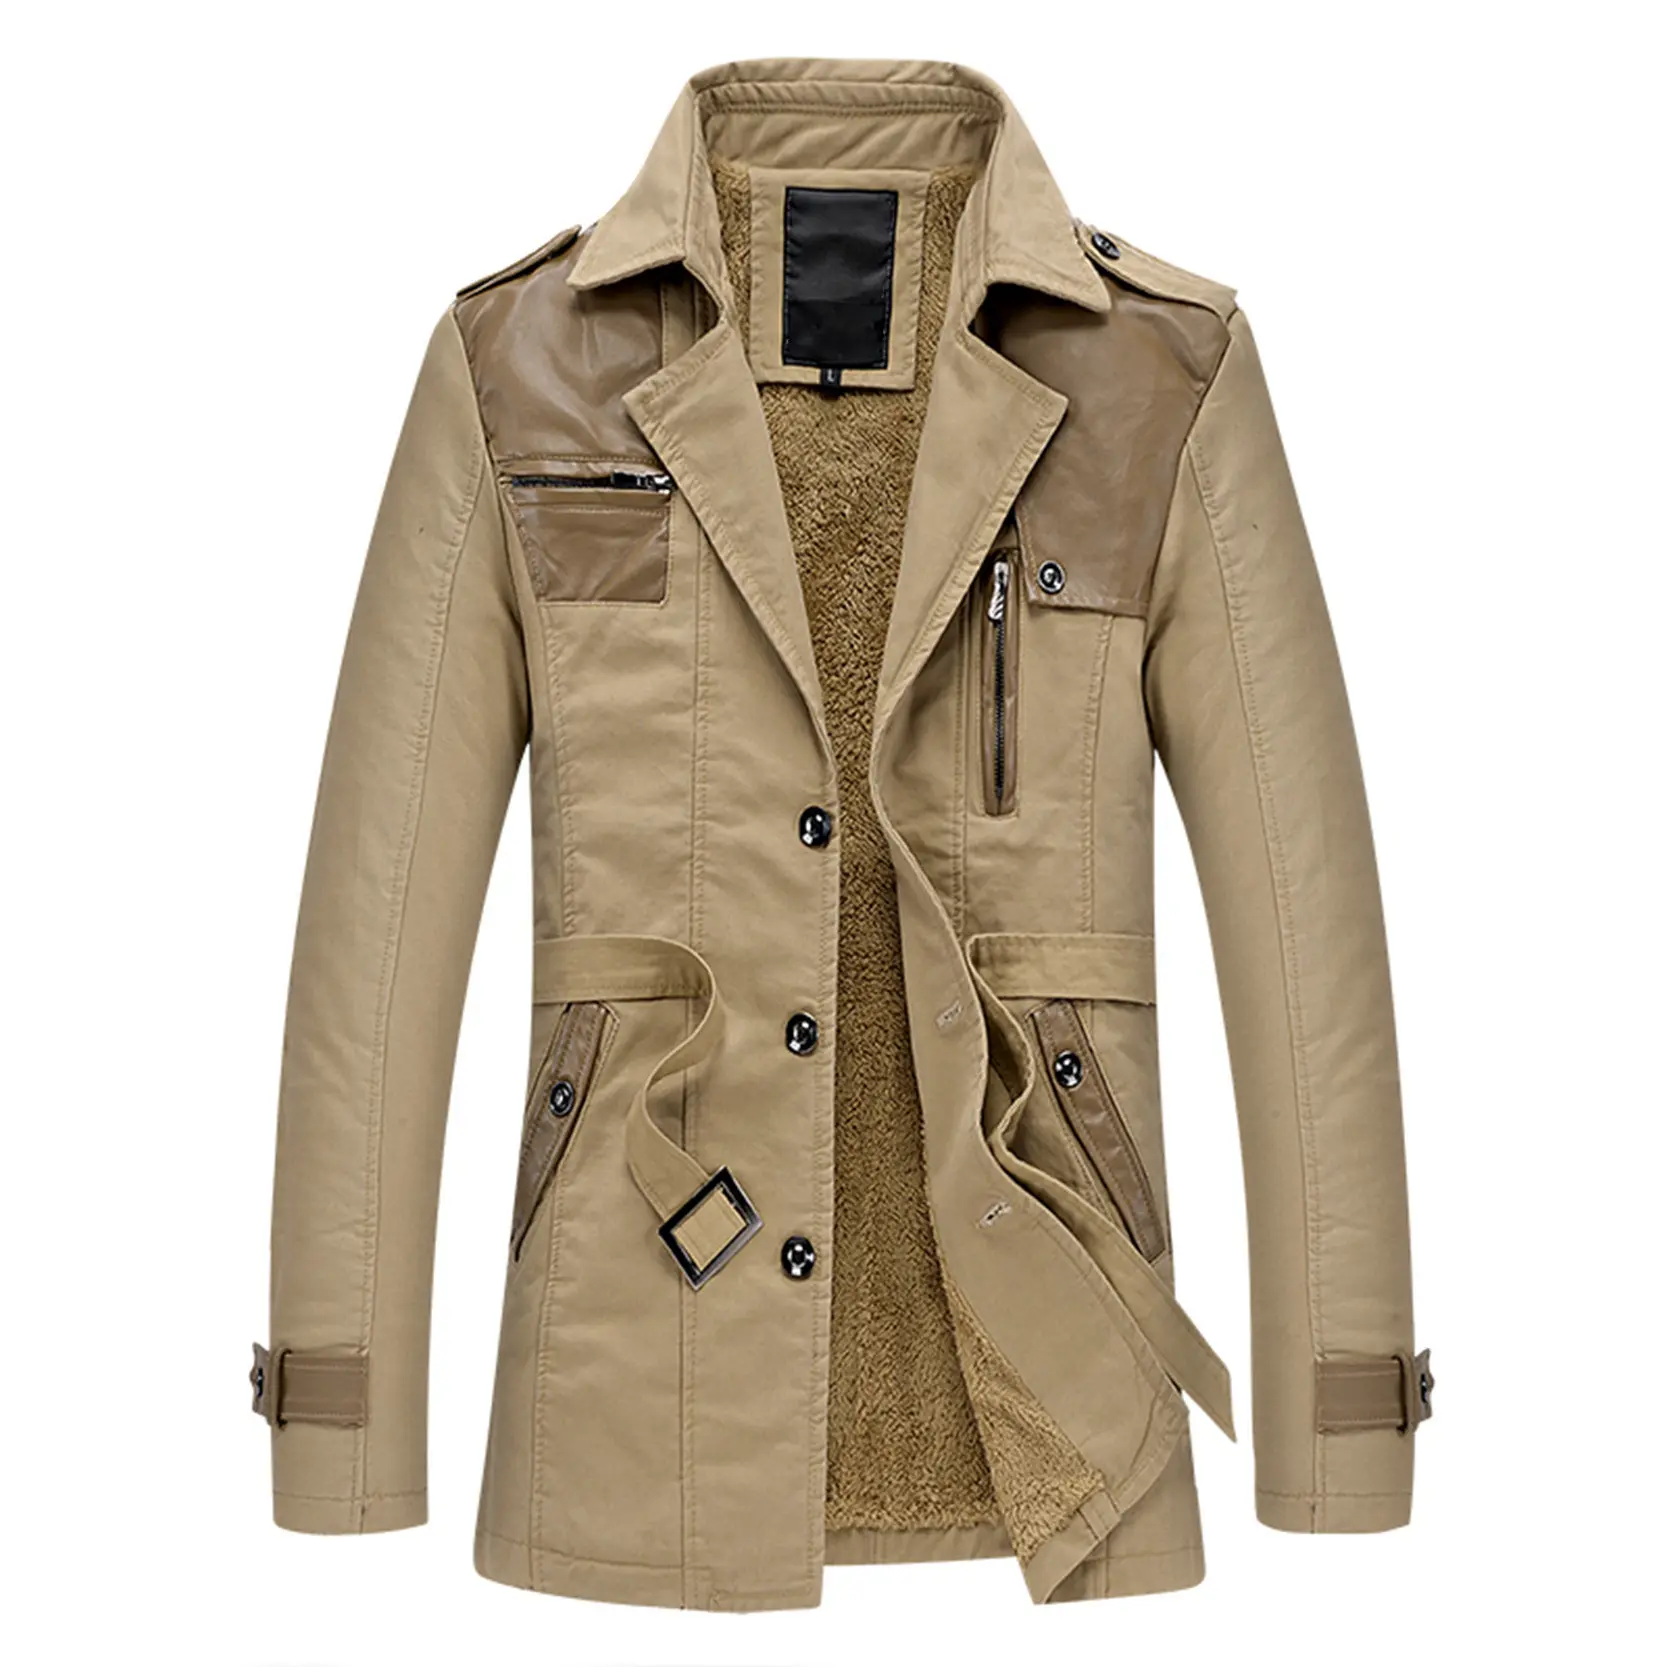 New Men Fashion Jacket Coat Winter Men's Casual Overcoat Jacket Solid Color Trench Coat